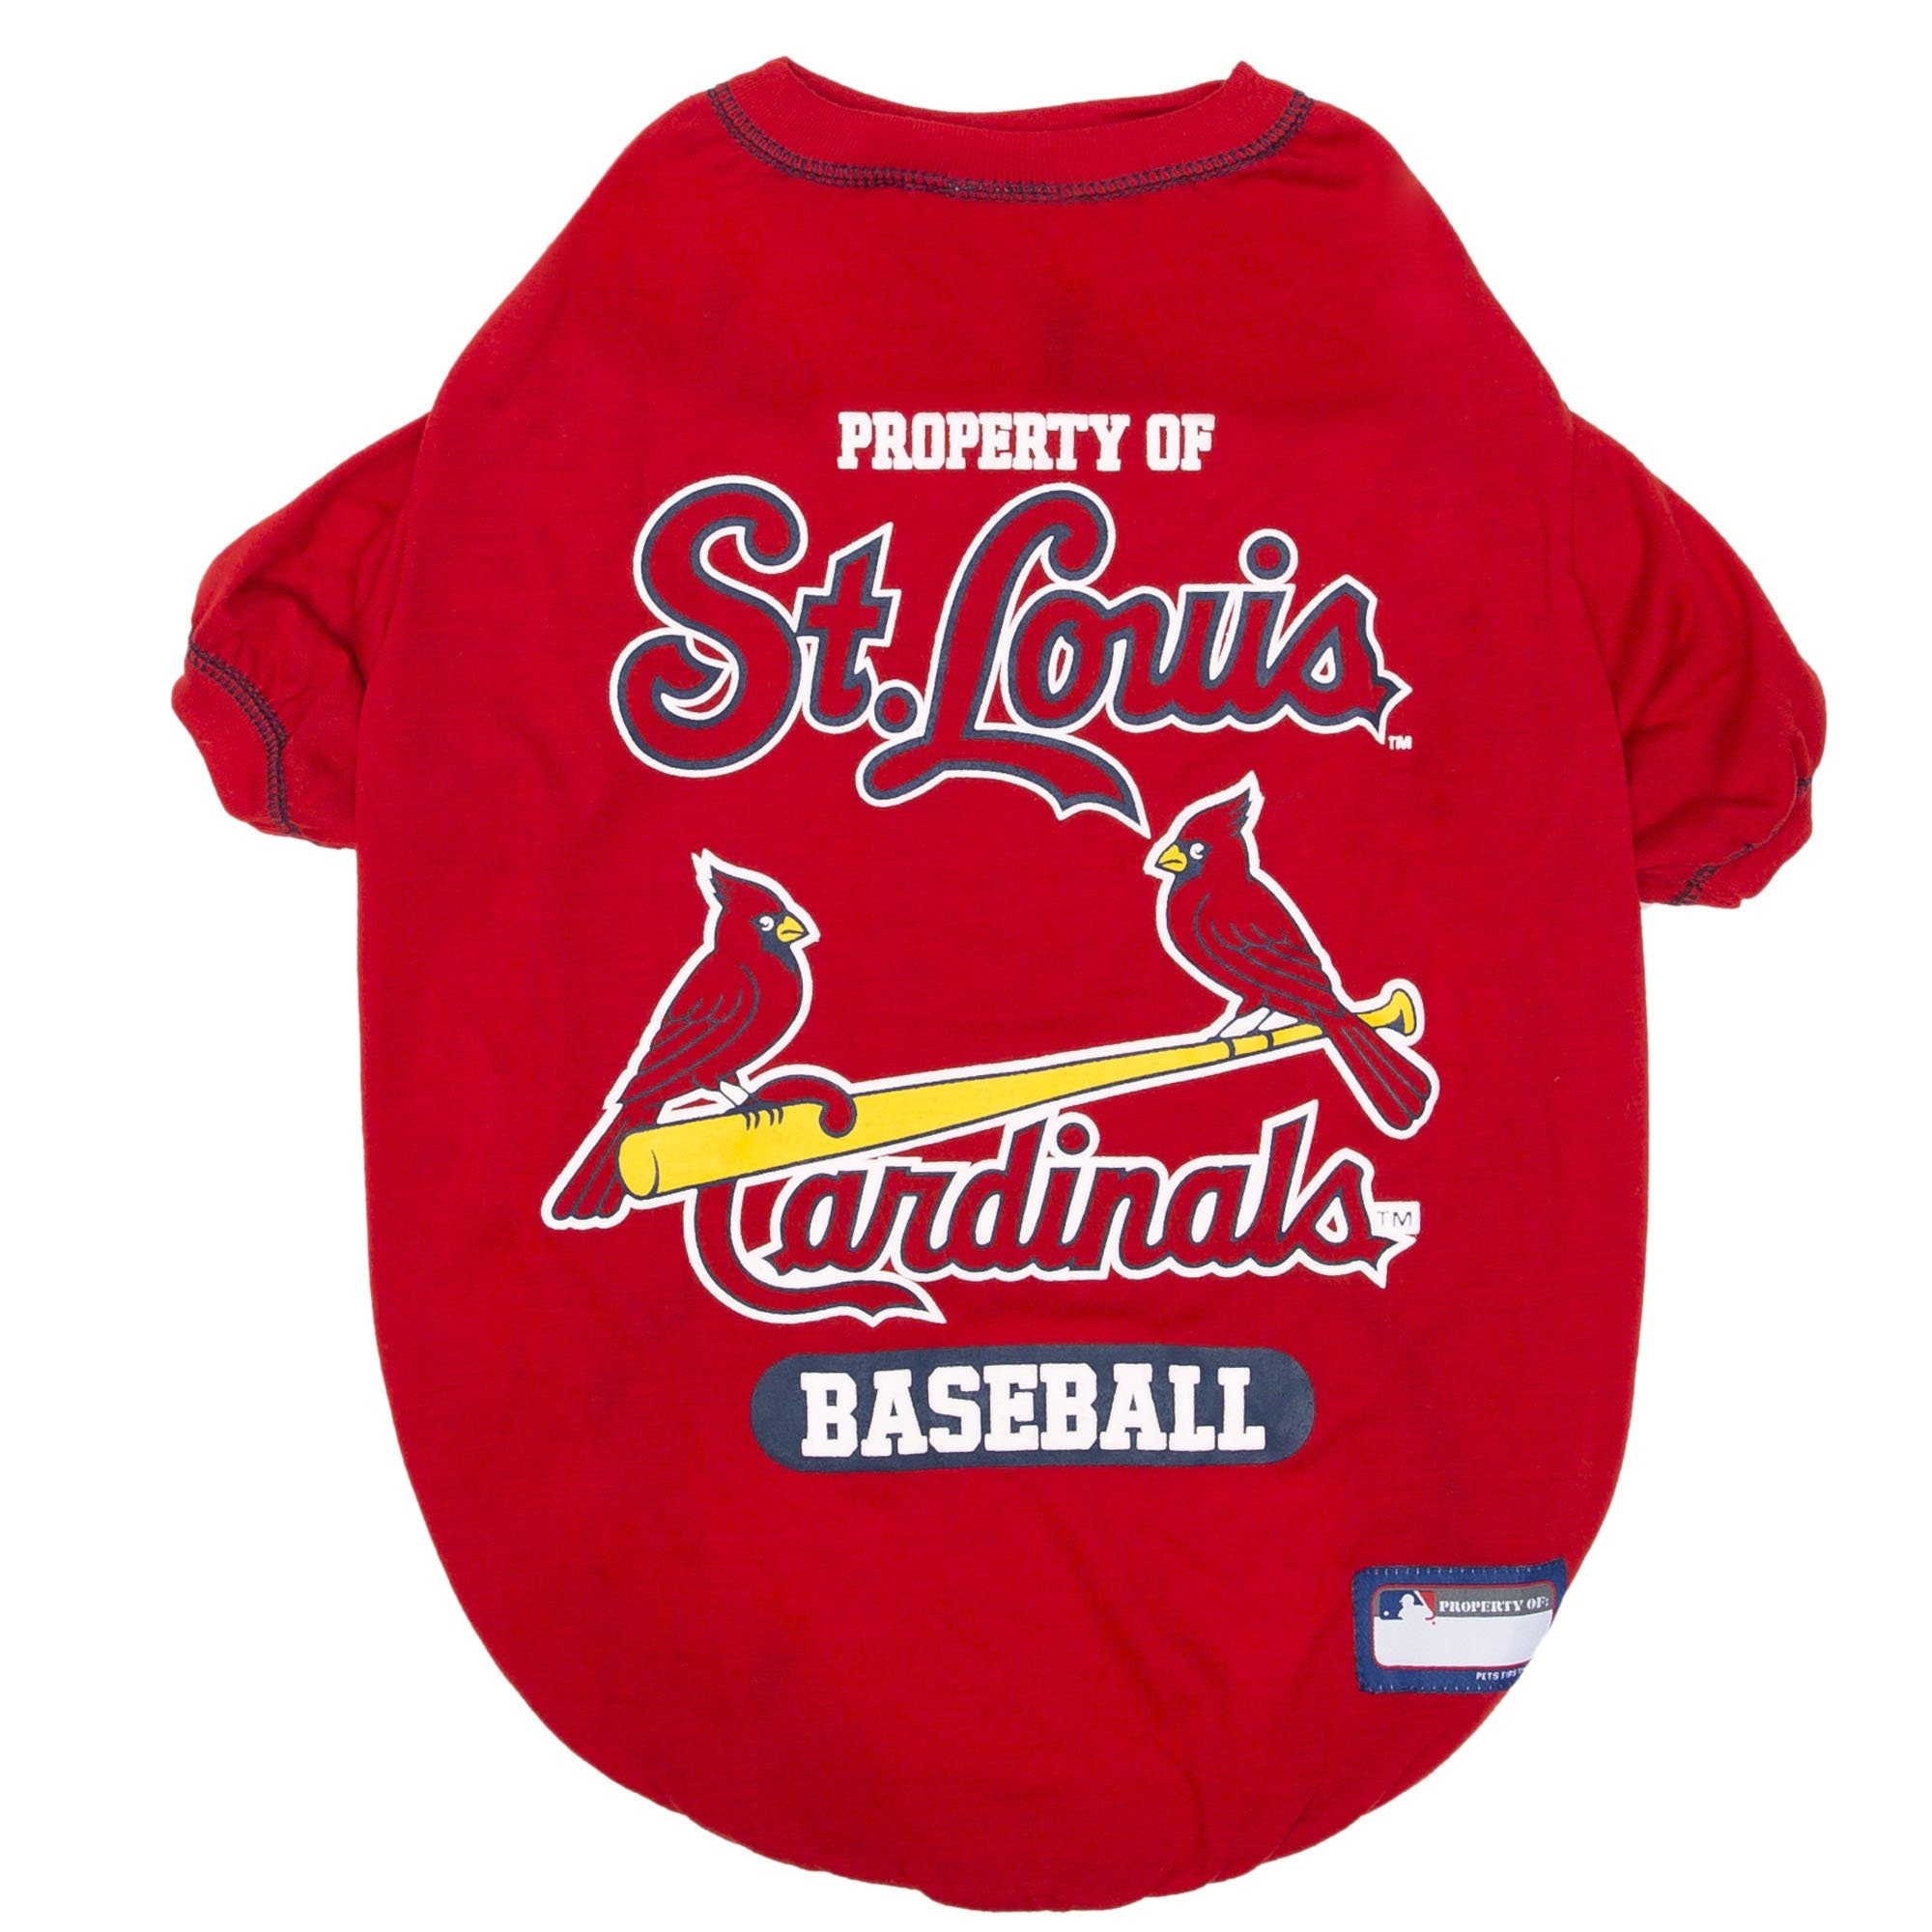 St. Louis Cardinals MLB 3D Baseball Jersey Shirt For Men Women Personalized  - Freedomdesign